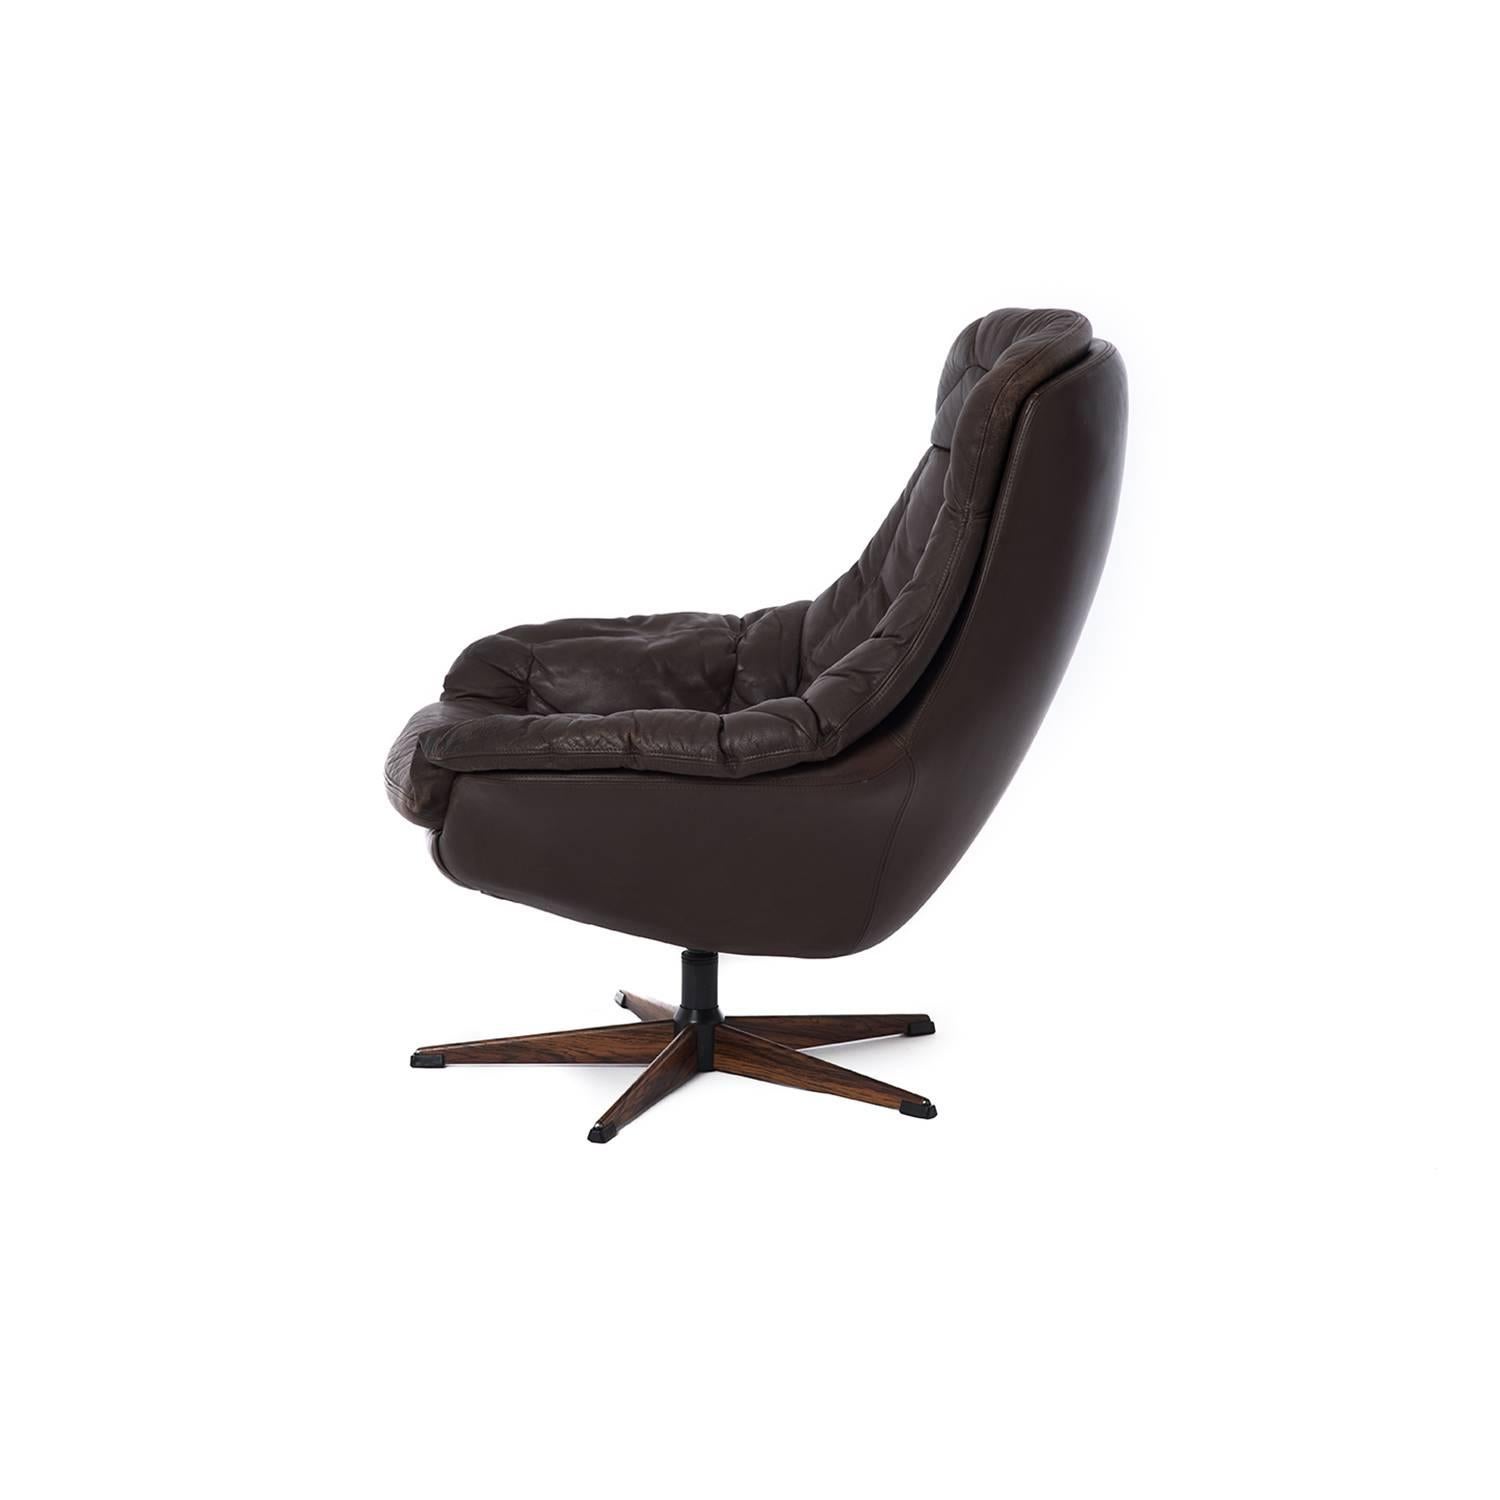 Scandinavian Modern Danish Modern Swivel Glove Chair in Espresso Leather by H. W. Klein